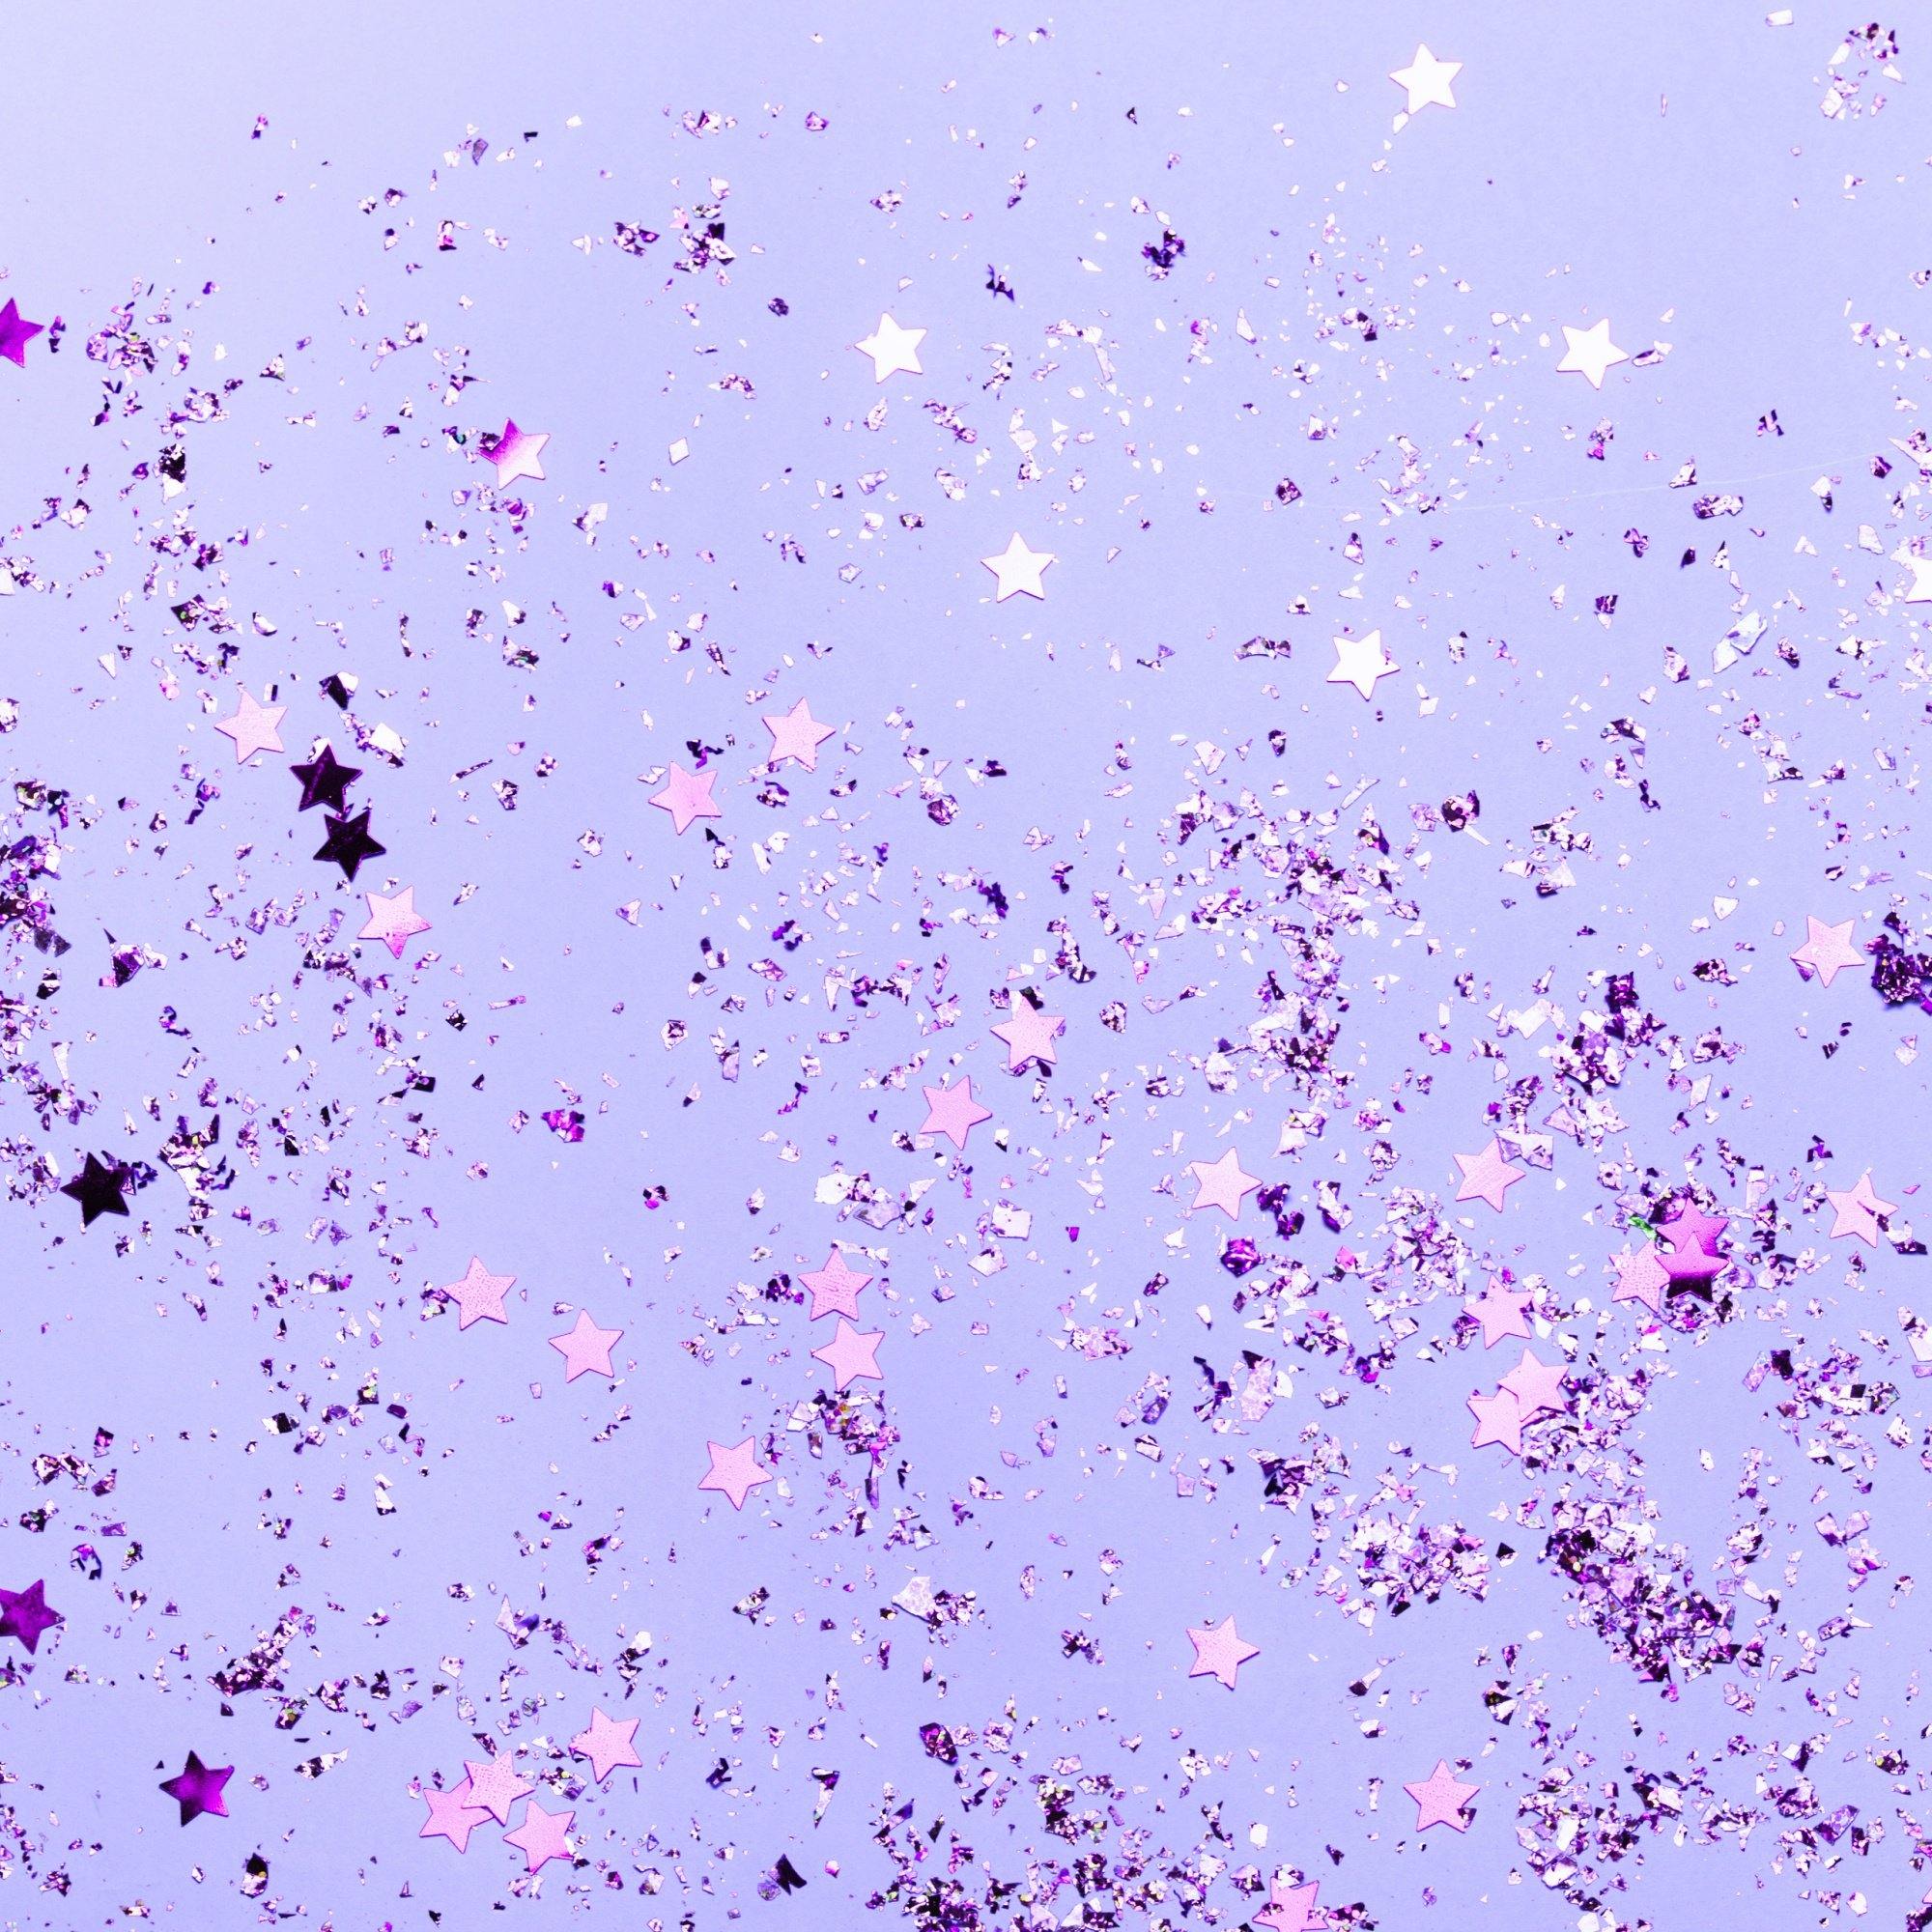 Michael Kors  Iphone background wallpaper, Pink wallpaper iphone, Bling  wallpaper